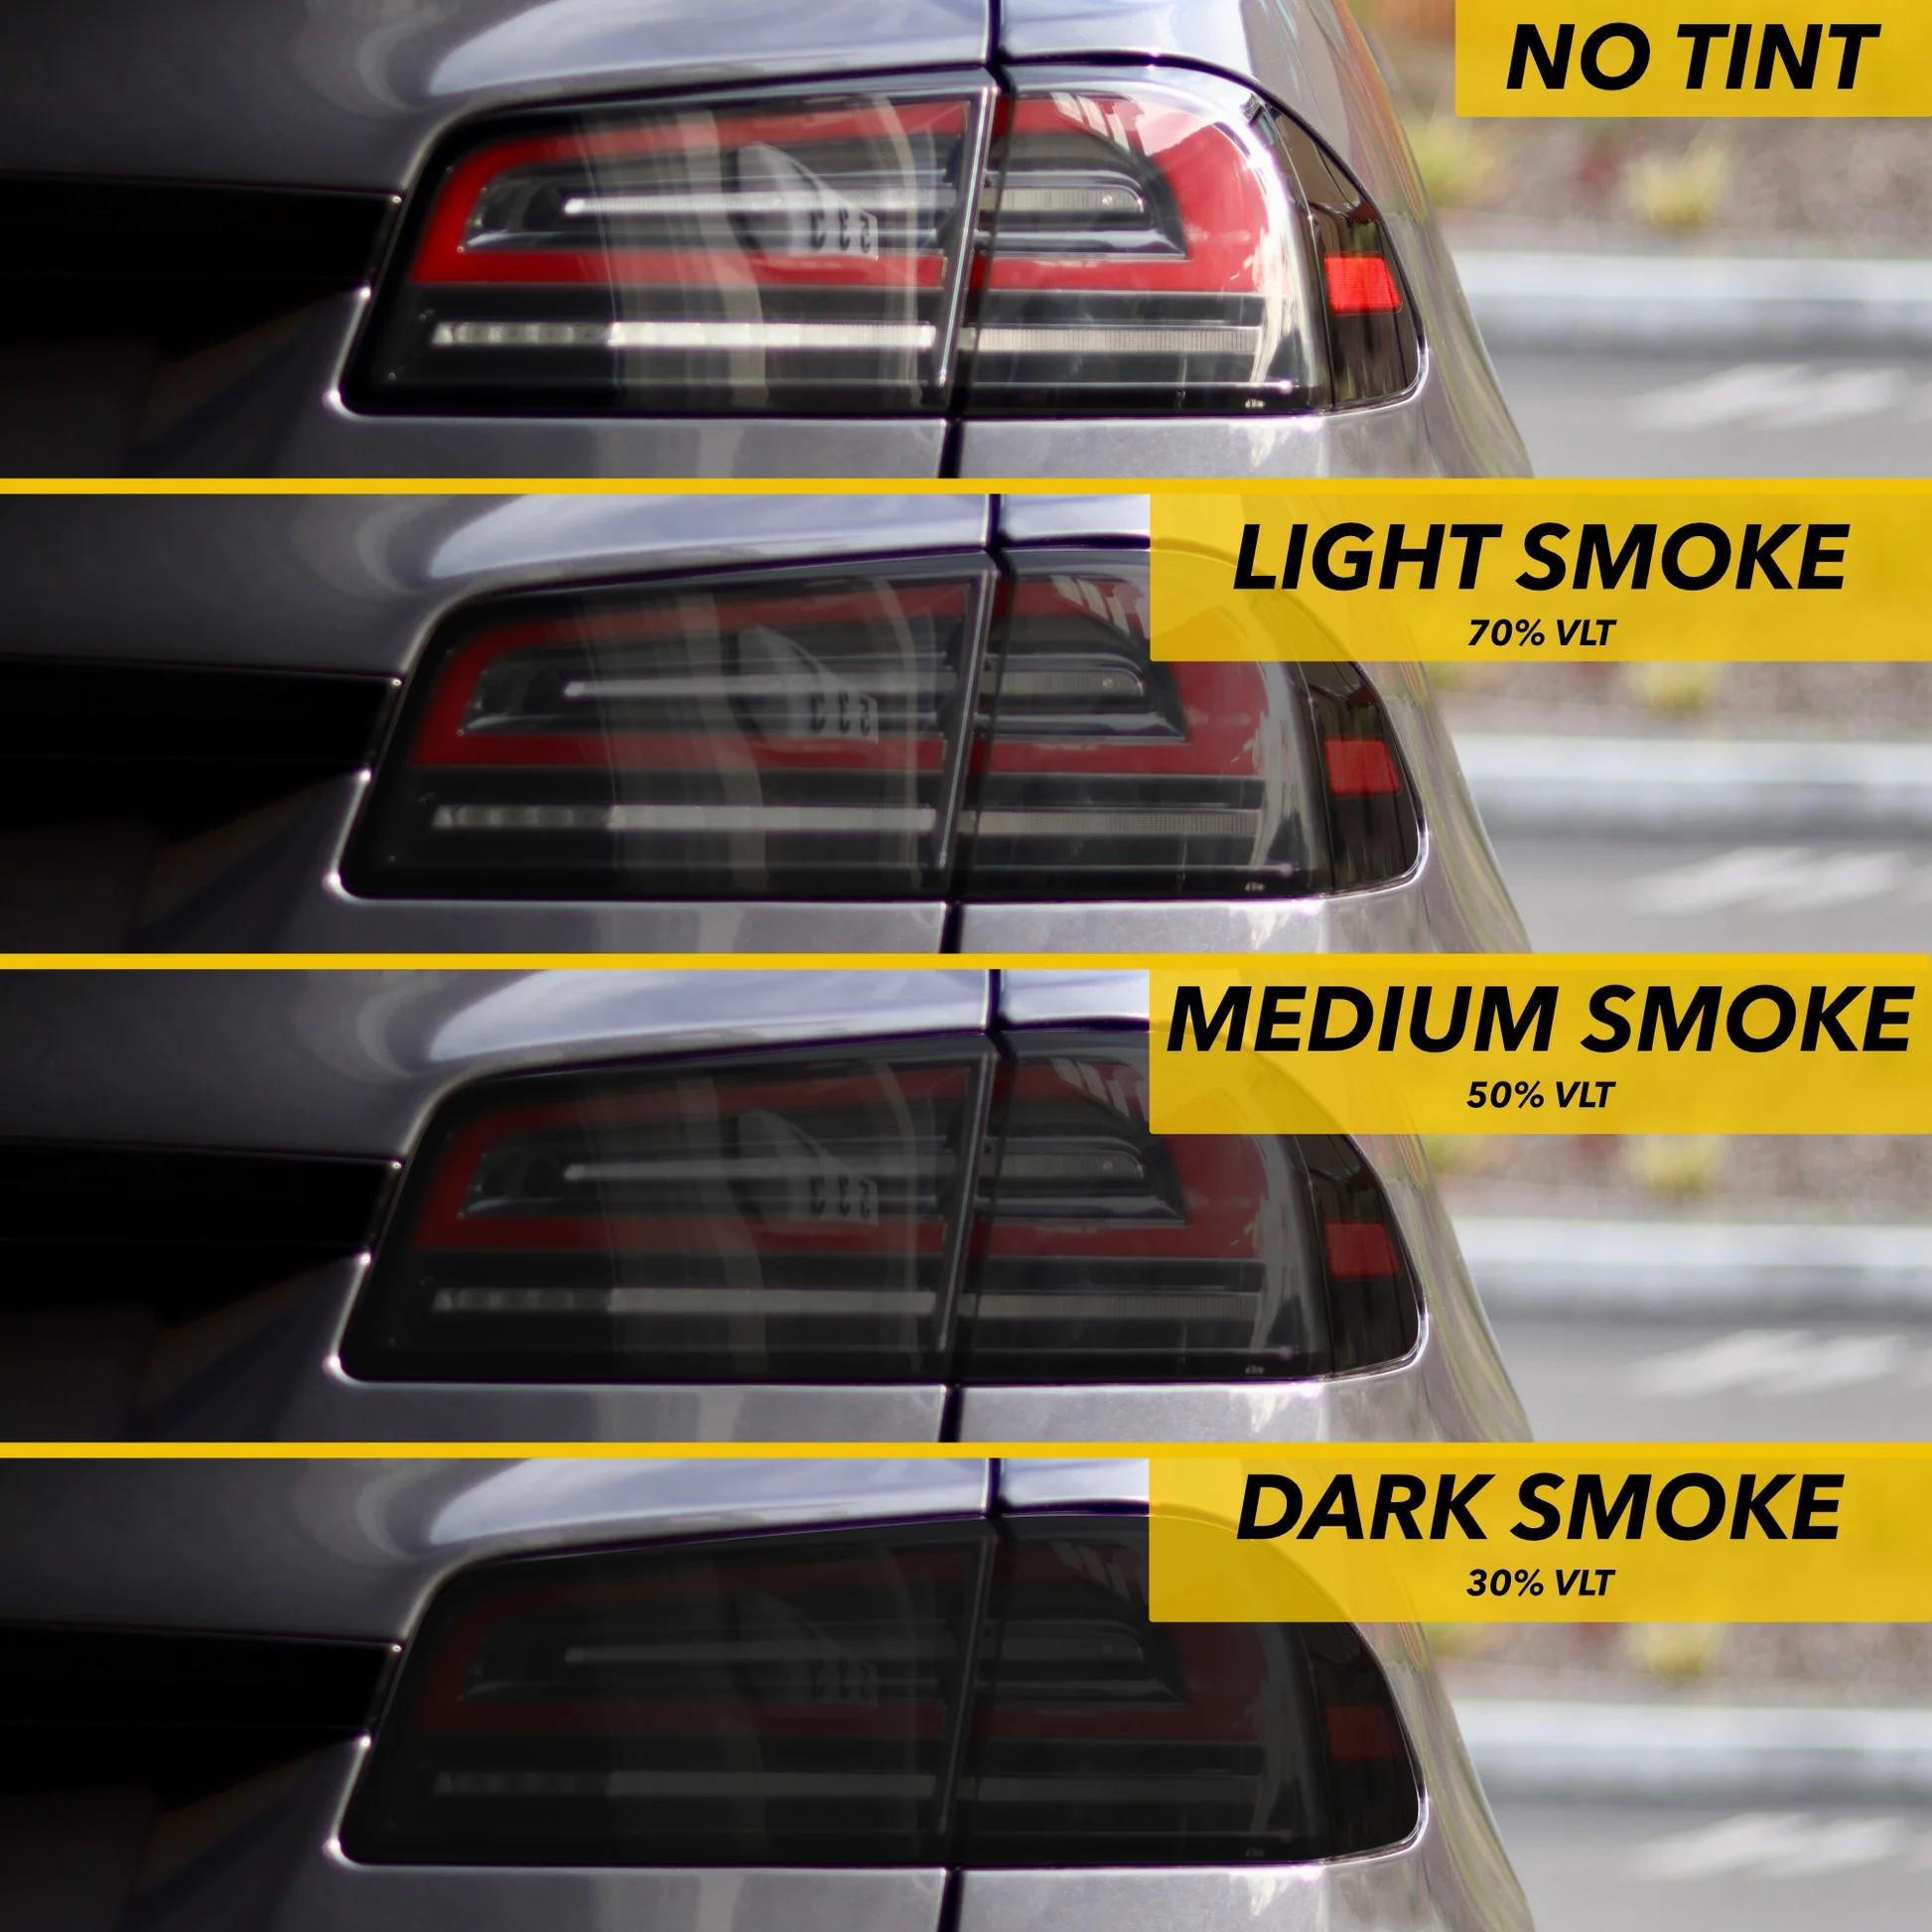 smoked brake lights - Are brake lights illegal